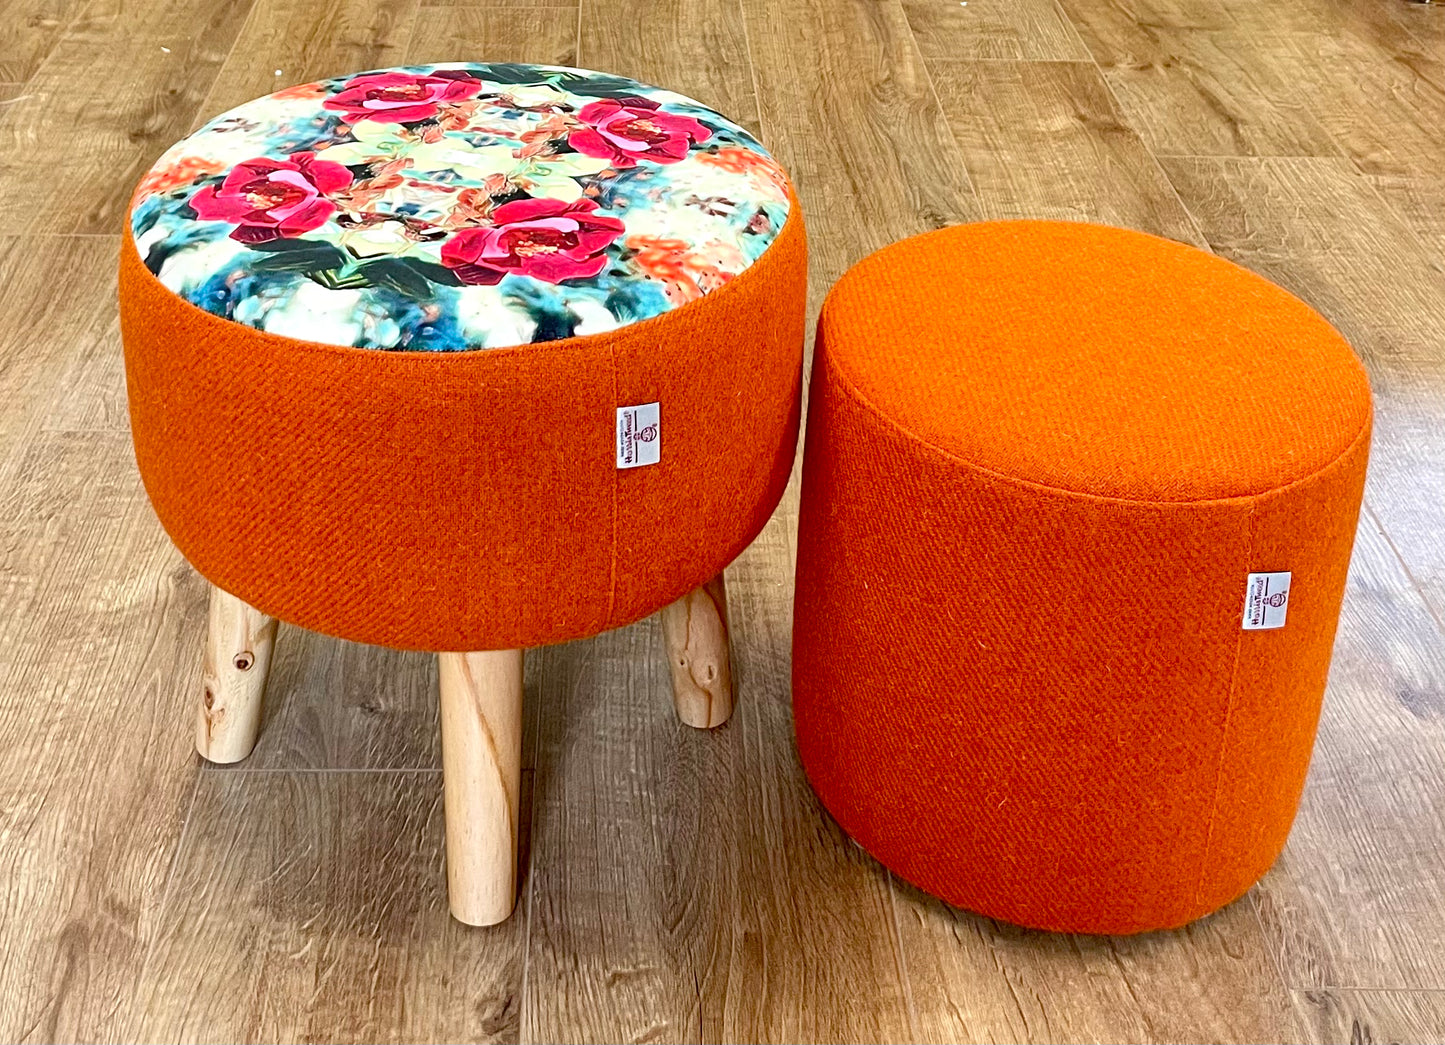 Red Rose Velvet and Orange Harris Tweed Upholstered Footstool with Light Rustic Wooden Legs.